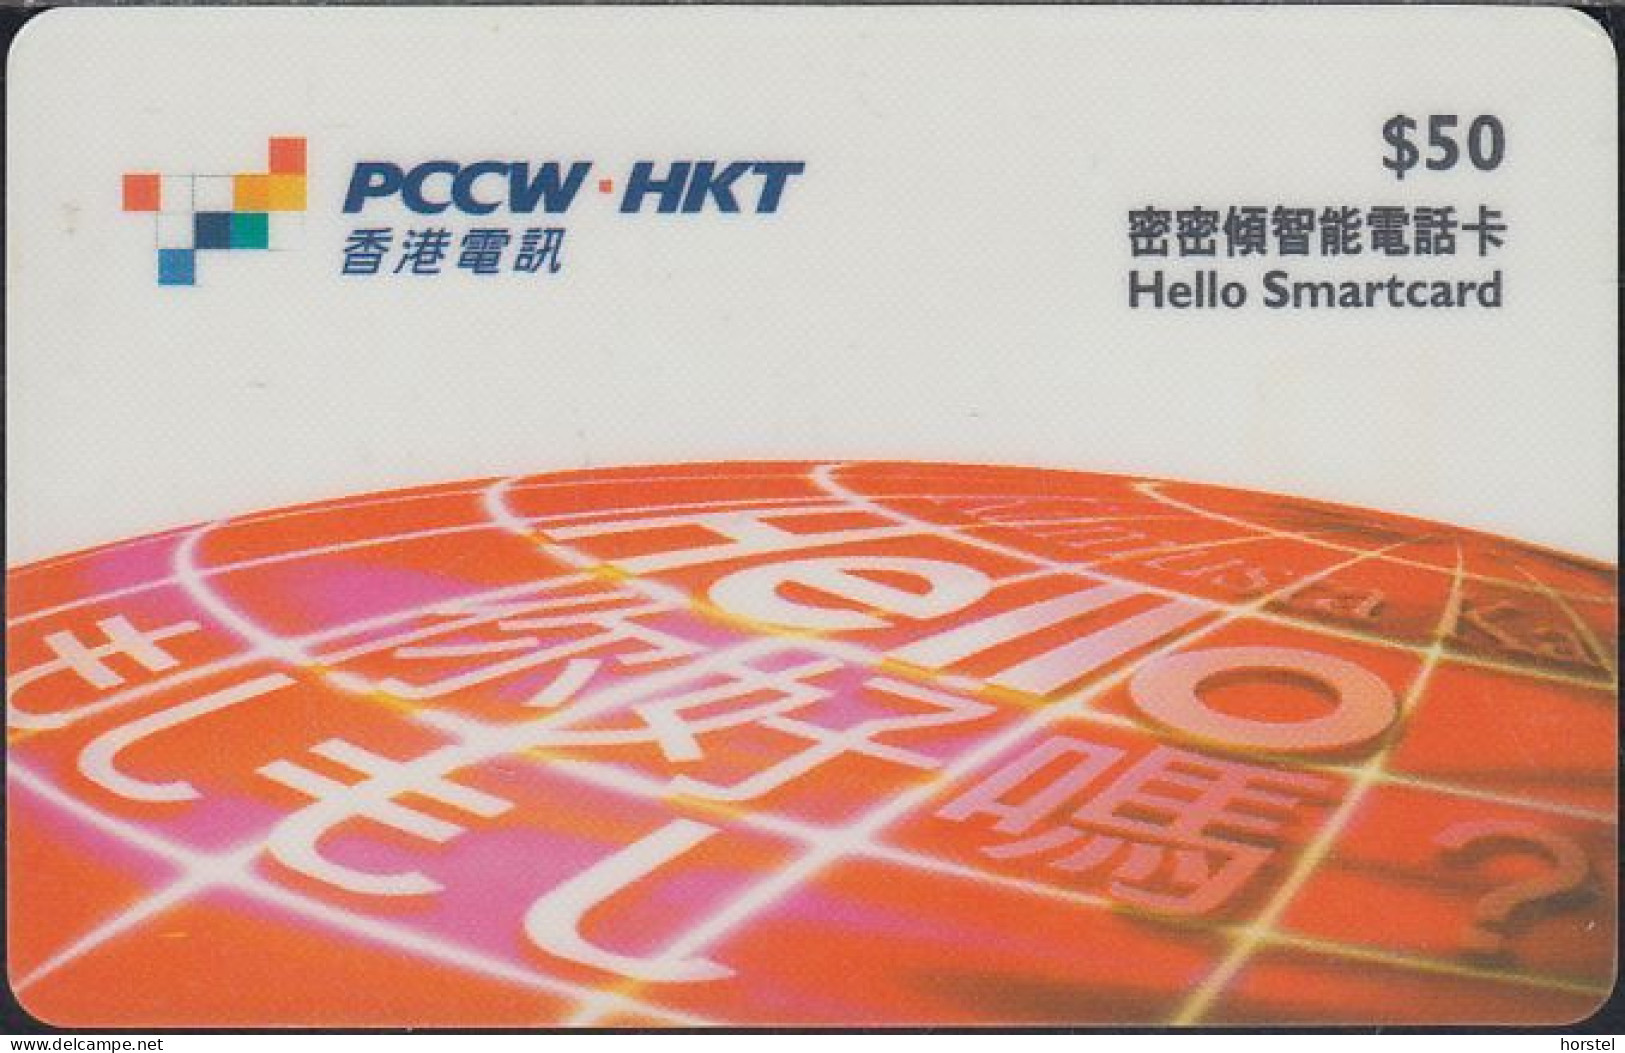 Hongkong - HKT-0001F - Hello Smartcard - Globe $50 (PEAP) - Hong Kong